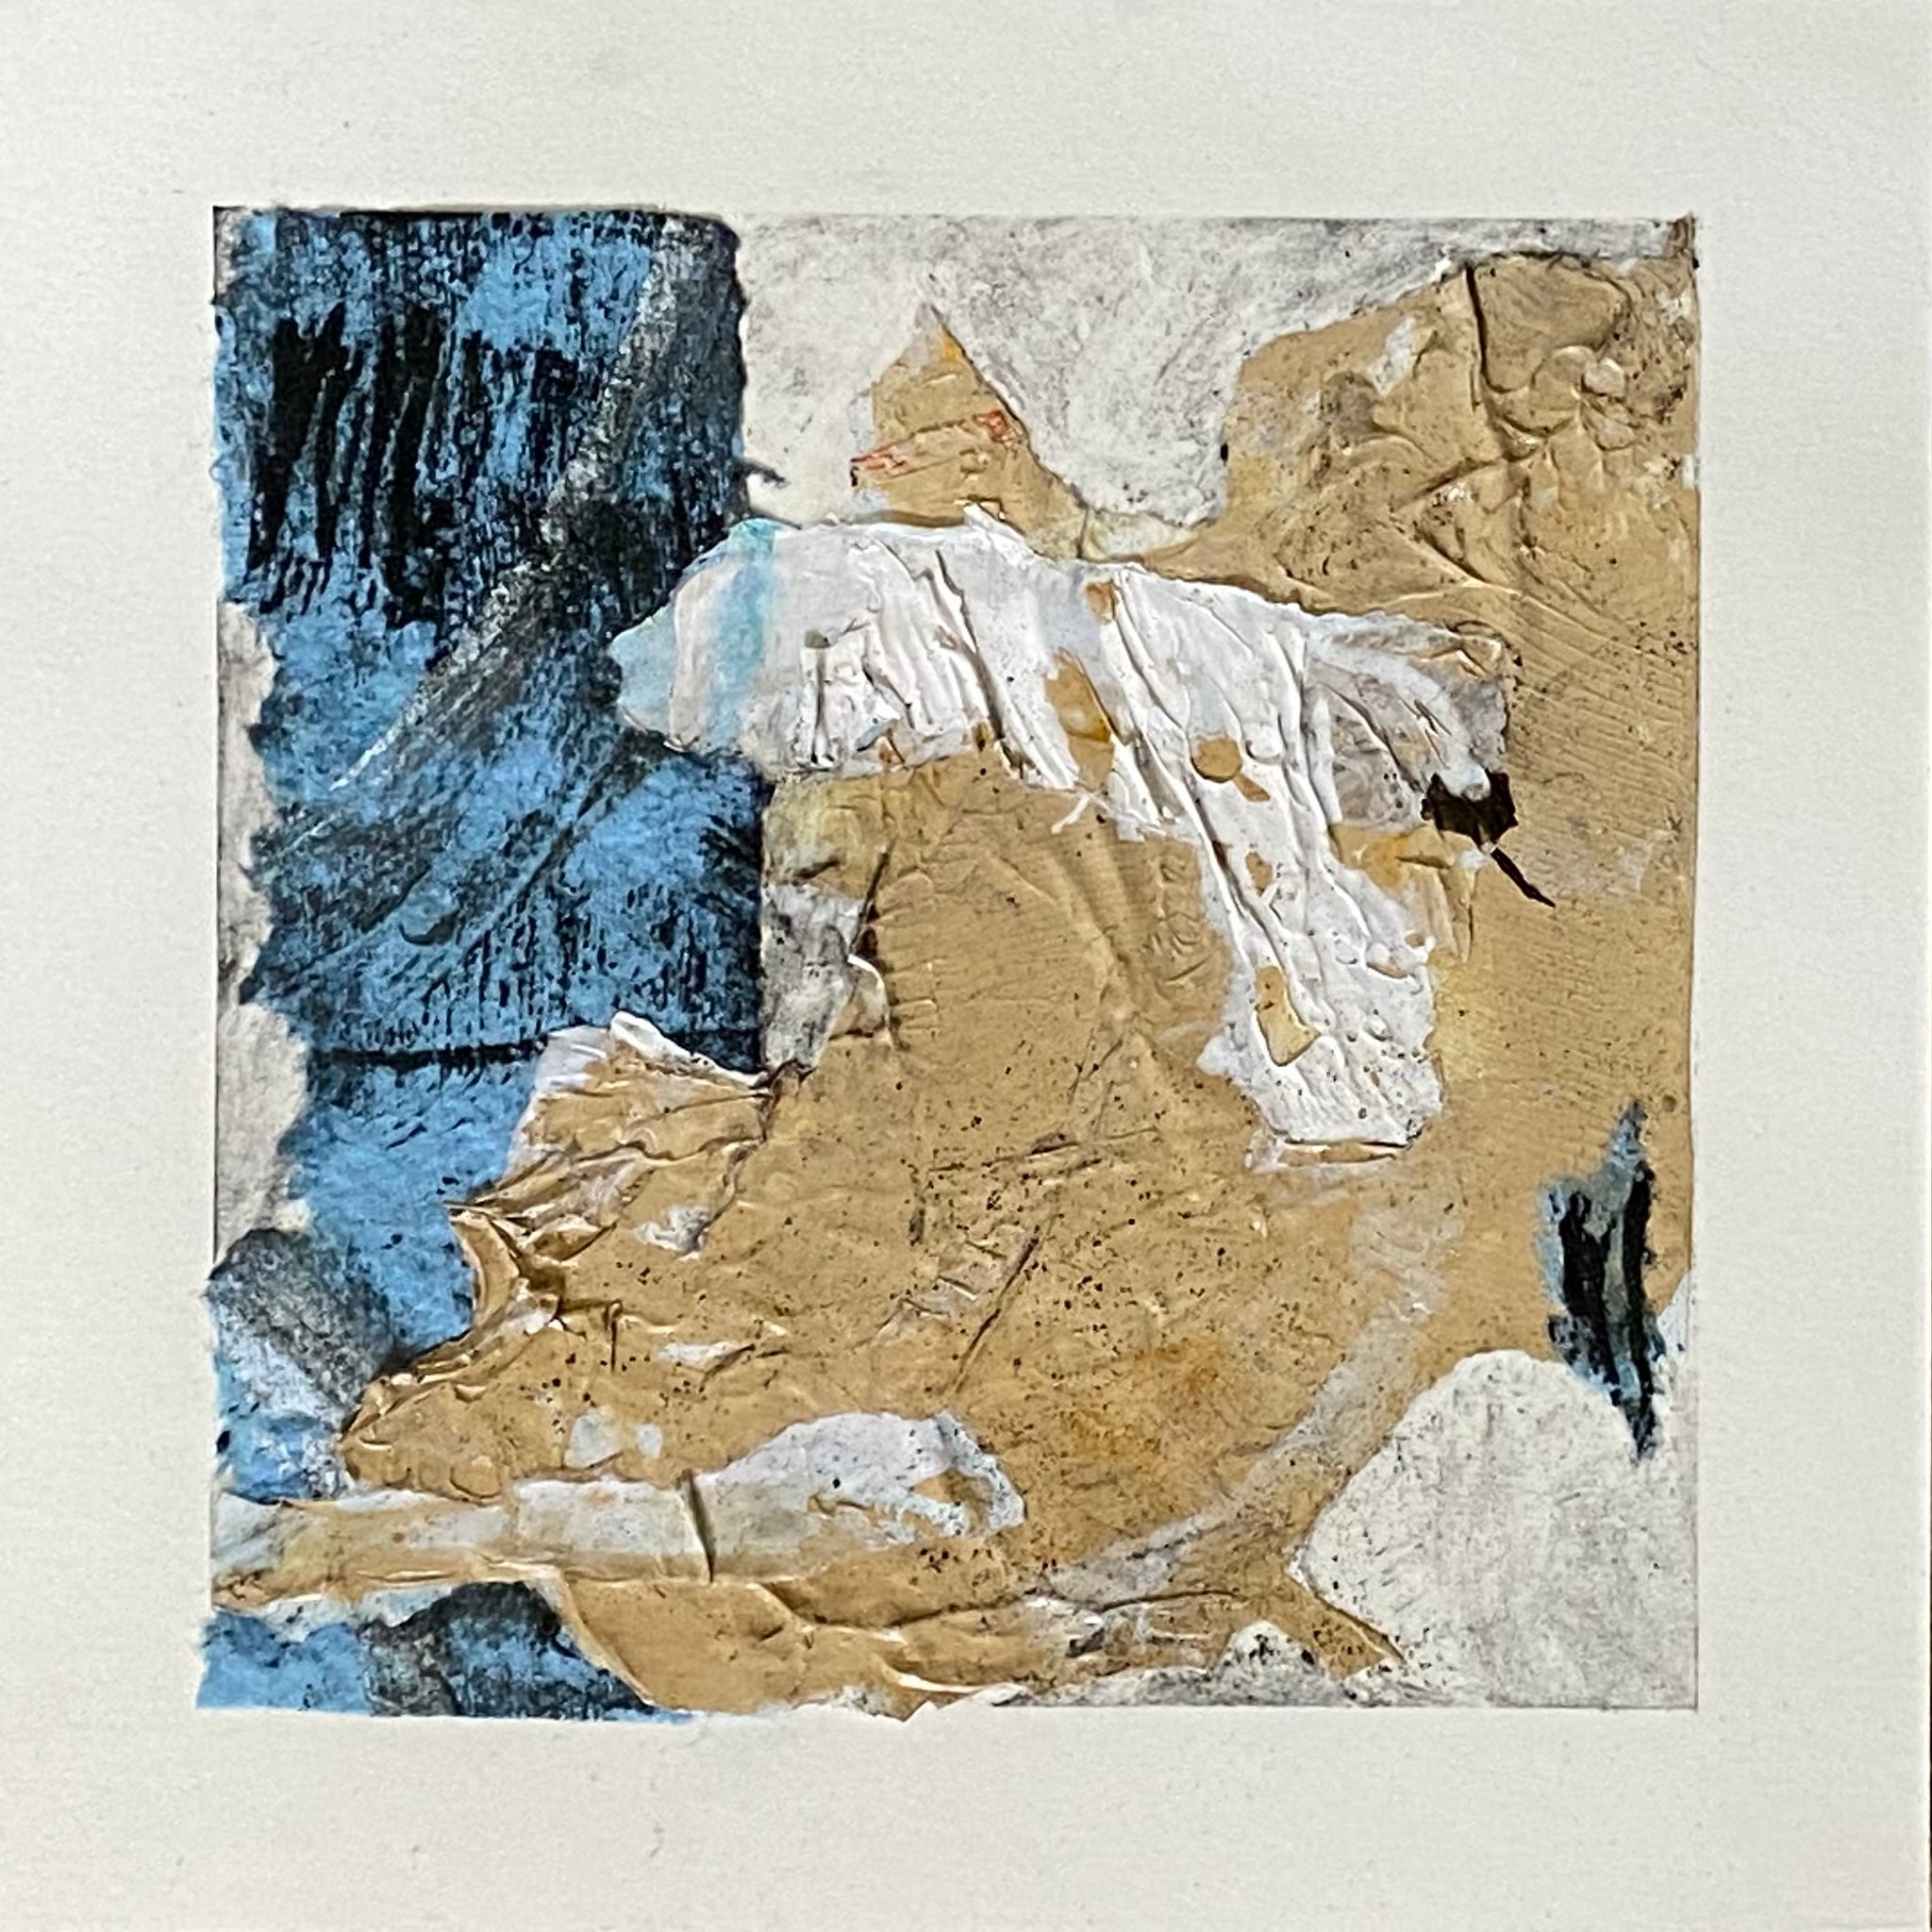 Juanita Bellavance, Ocean terrain, 2020, Collage on paper, 6 x 6 inches. Unframed